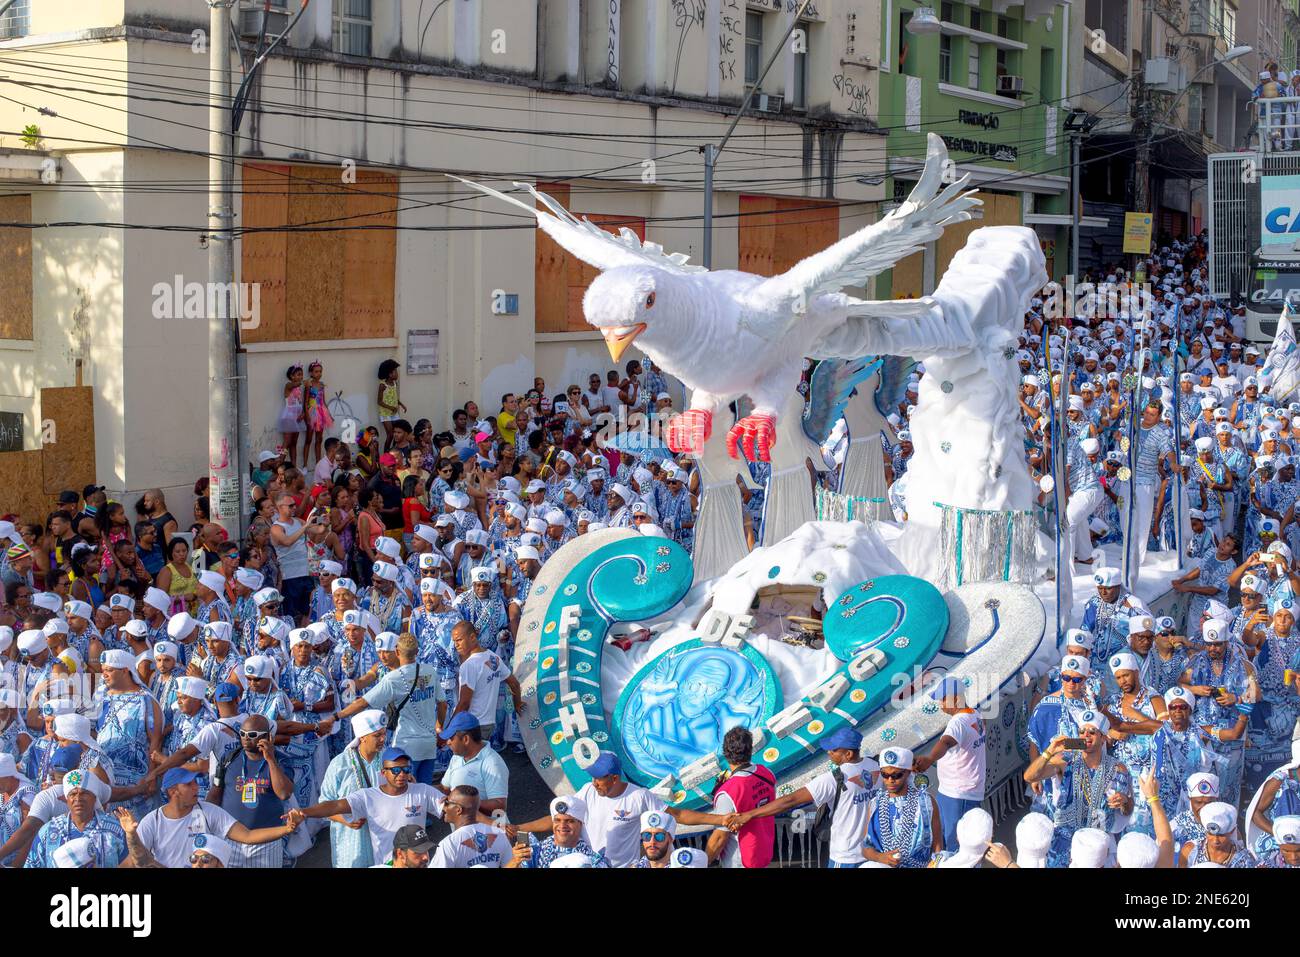 Mitglieder des traditionellen Karnevalsblocks Filhos de Gandy Parade auf dem Platz Castro Alves während des Karnevals in Salvador, Bahia. Stockfoto